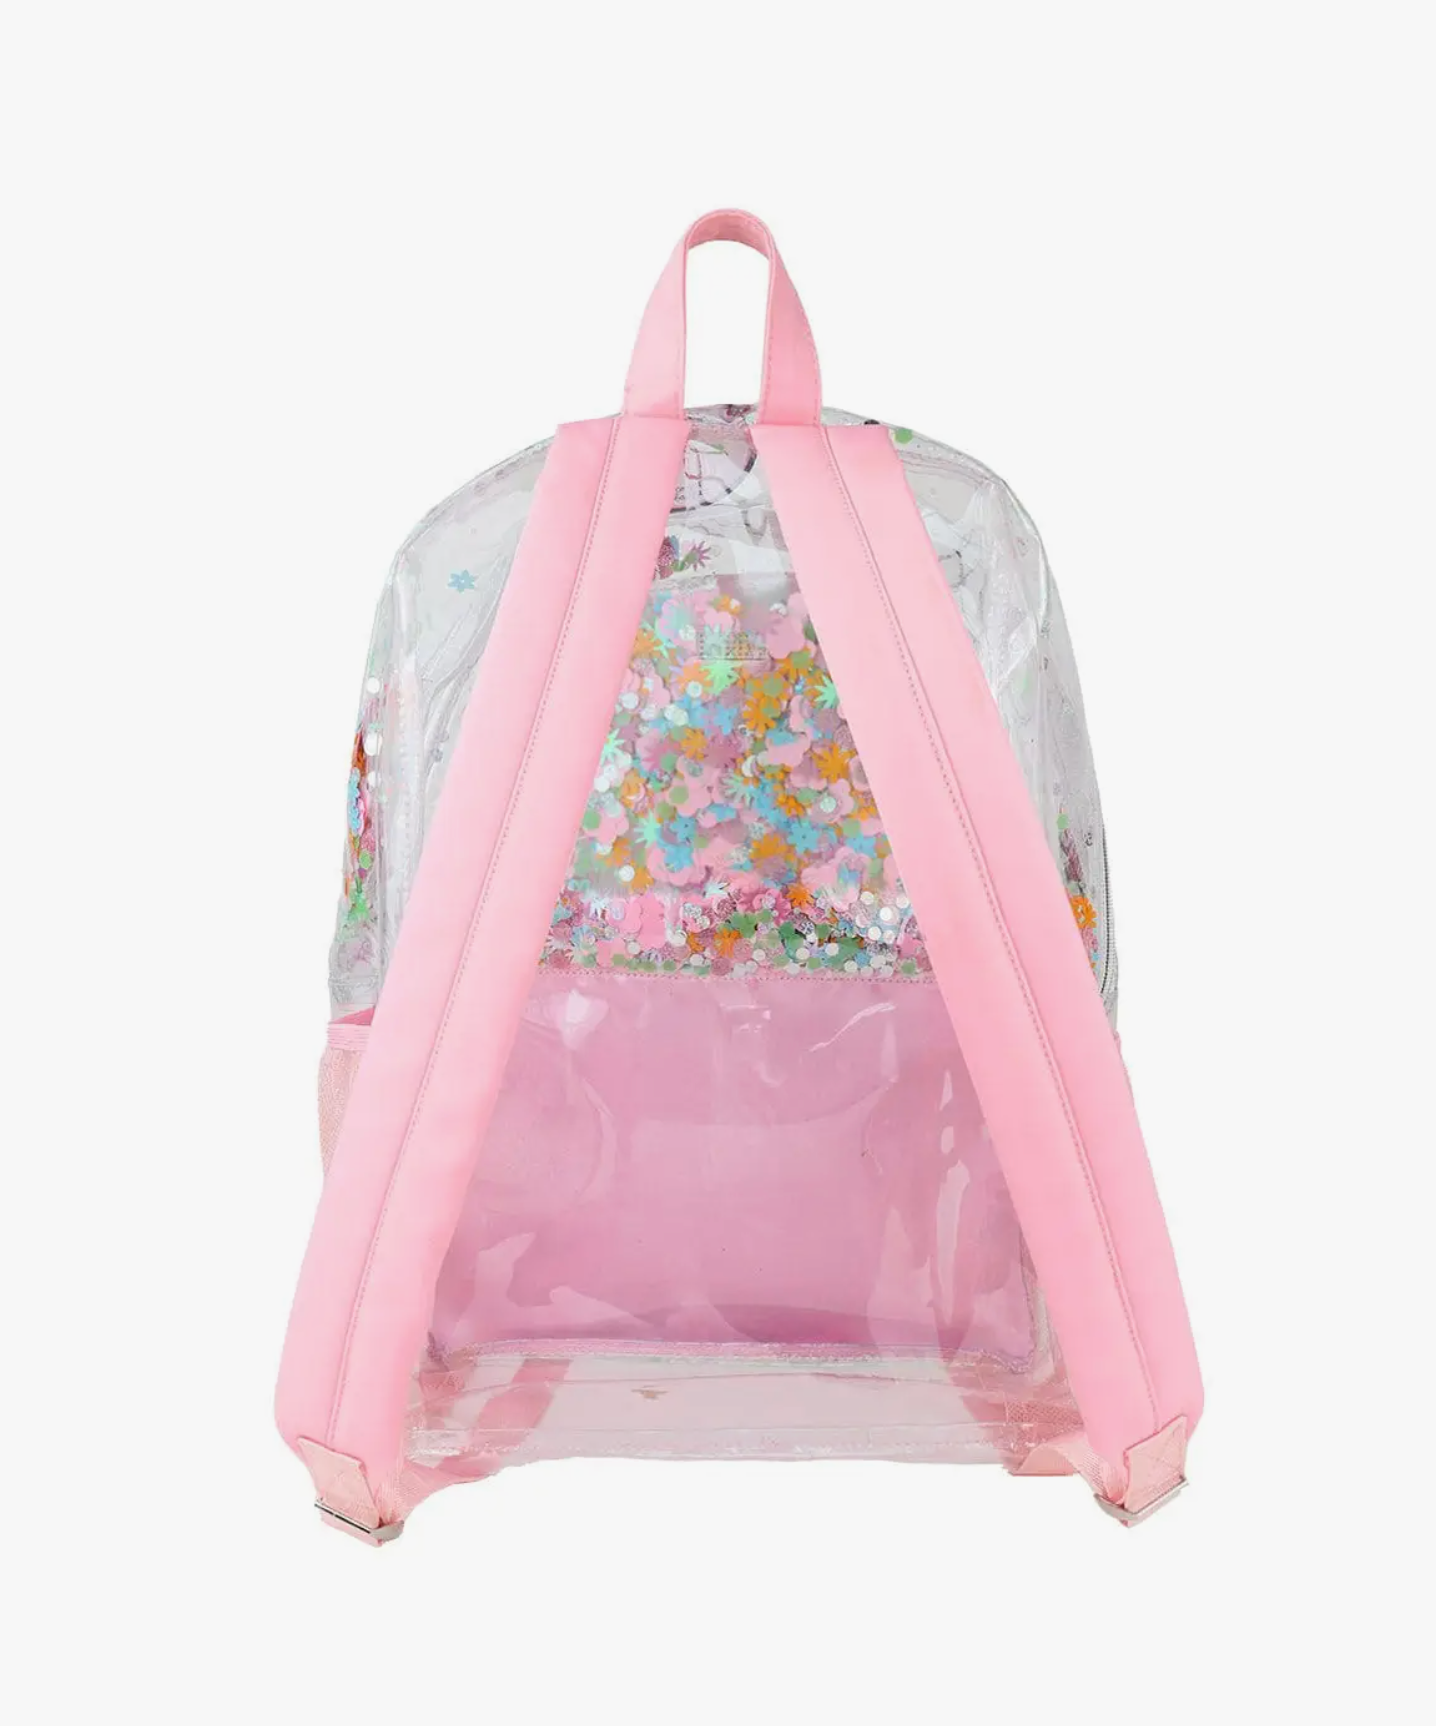 Flower Shop Confetti LARGE Backpack